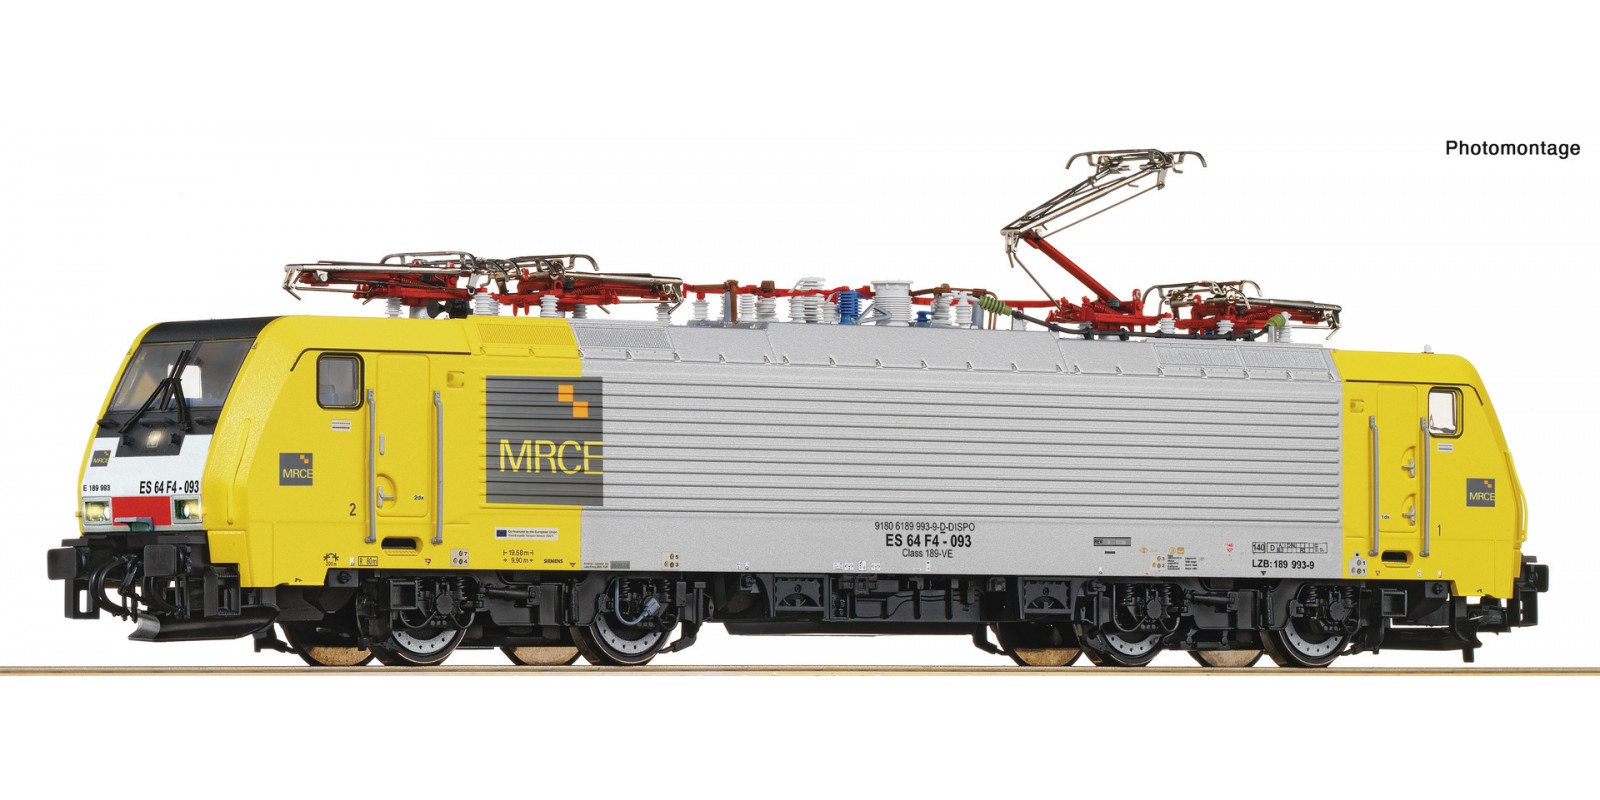 RO7500019 Electric locomotive 189 993-9, MRCE/SBB CI